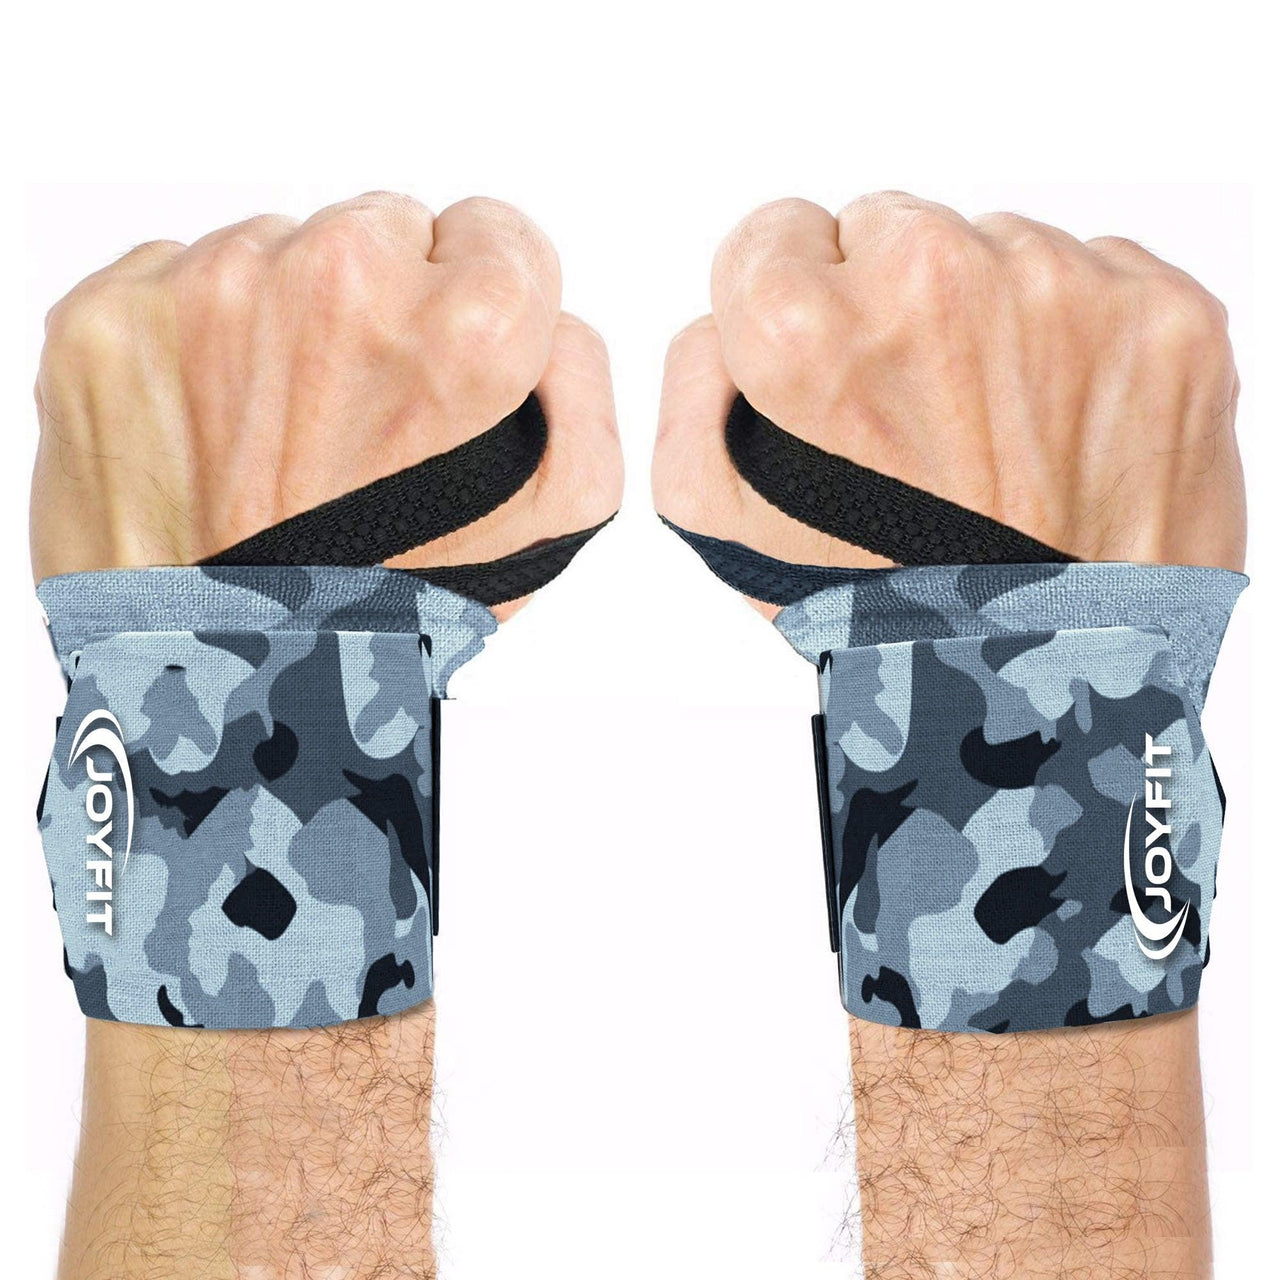 Joyfit wrist support